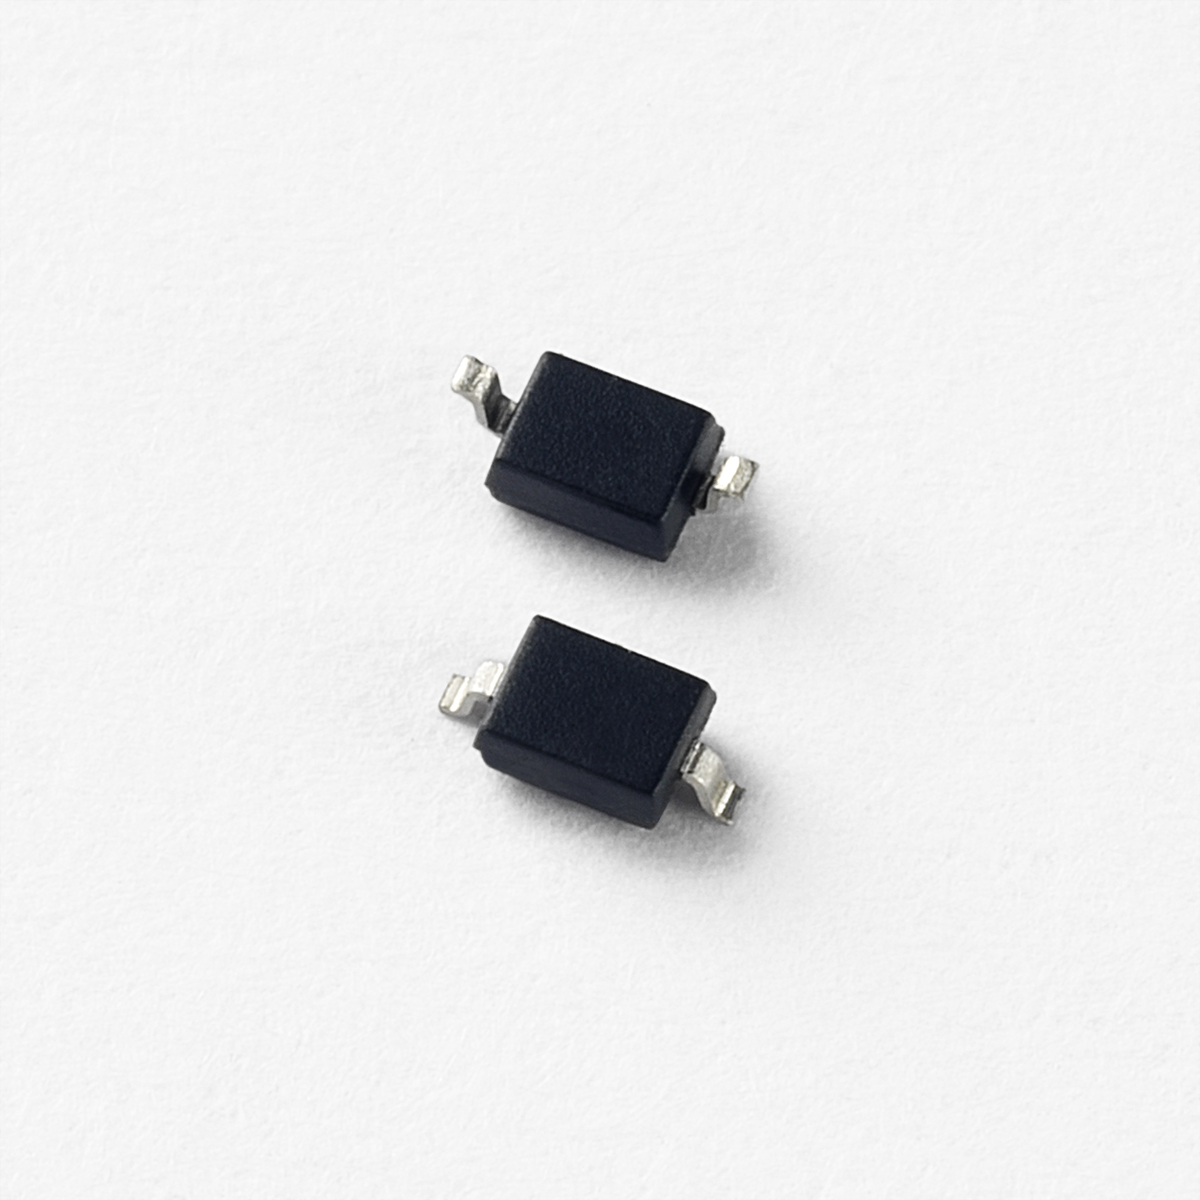 Littelfuses SP4208 Series AEC-Q101-qualified TVS diode arrays